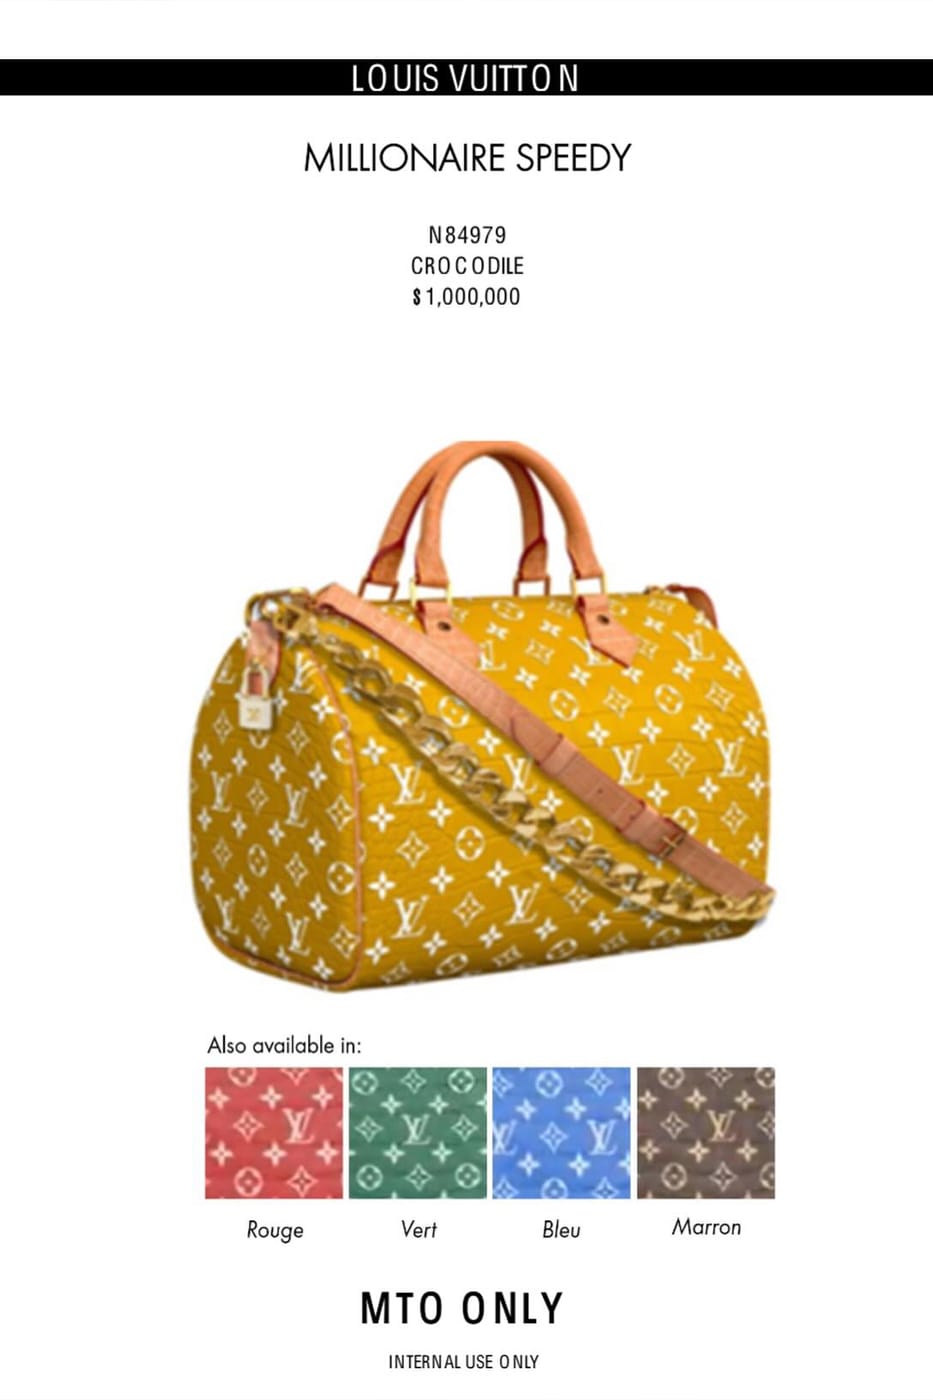 Pharrell $1 Million Louis Vuitton Speedy Bag 4 New Colors   Hypebeast